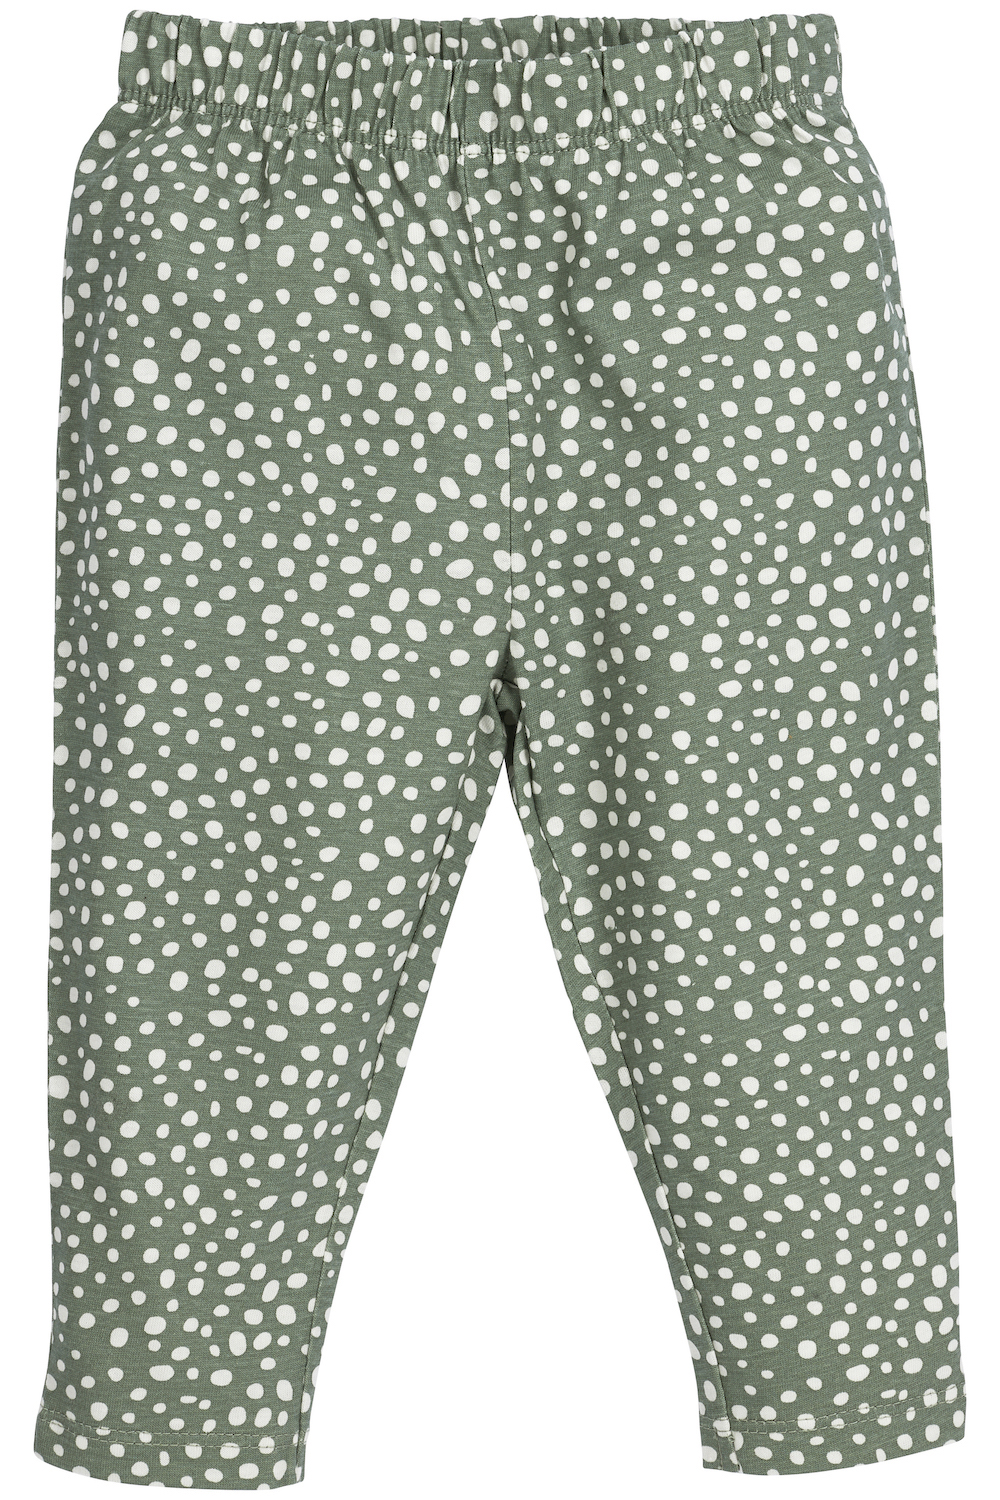 Baby pyjama 2-pack Cheetah - Forest Green - Maat 50/56